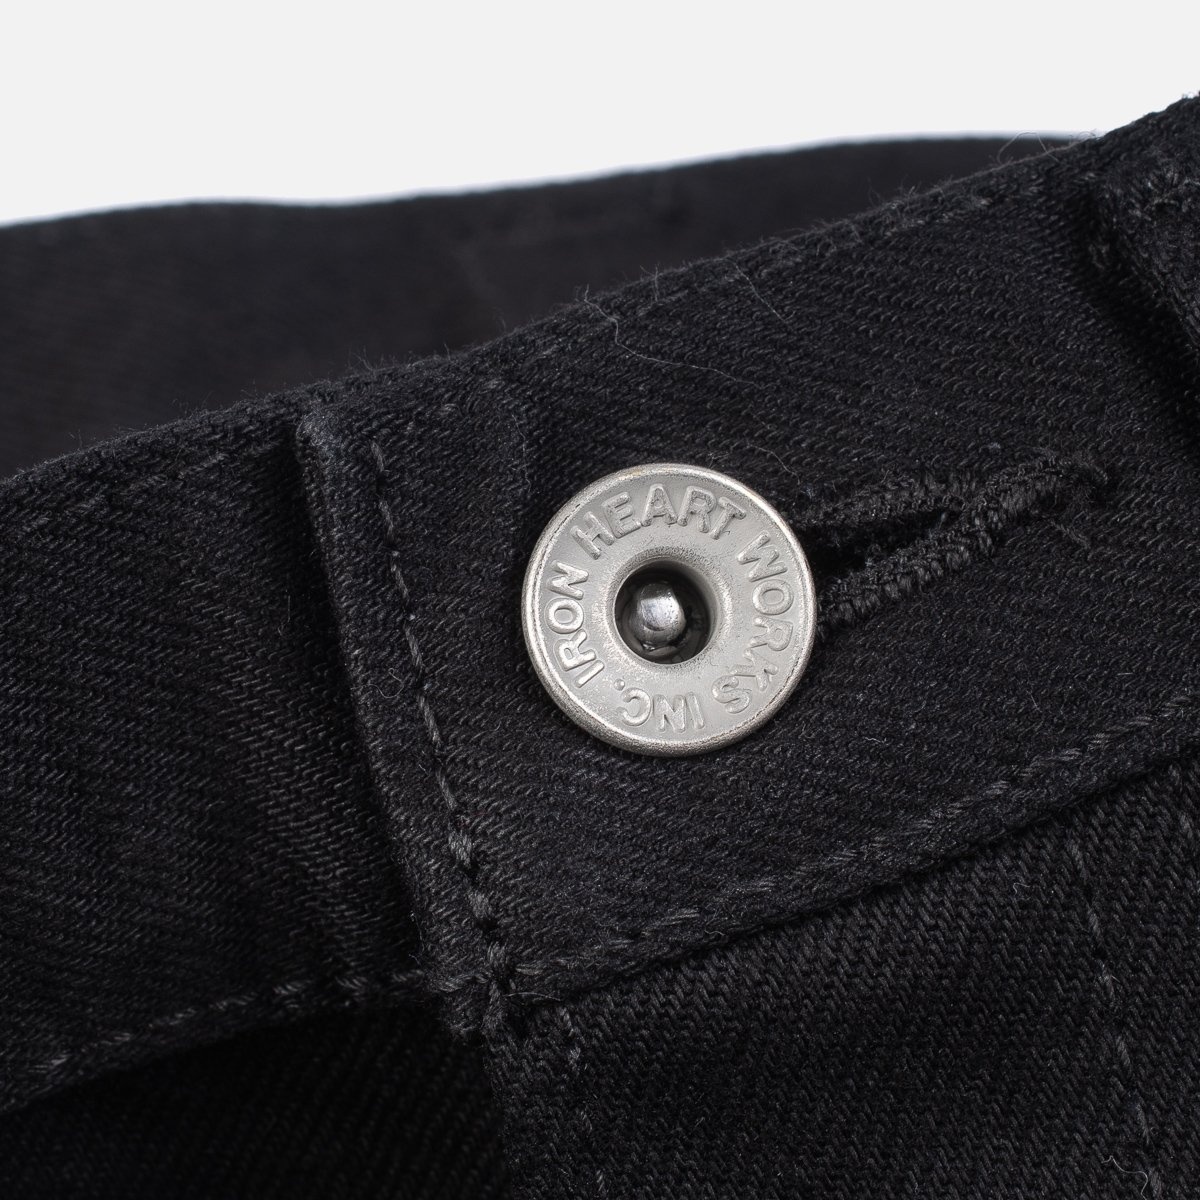 IH-888S-142bb 14oz Selvedge Denim Medium/High Rise Tapered Cut Jeans - Black/Black - 8